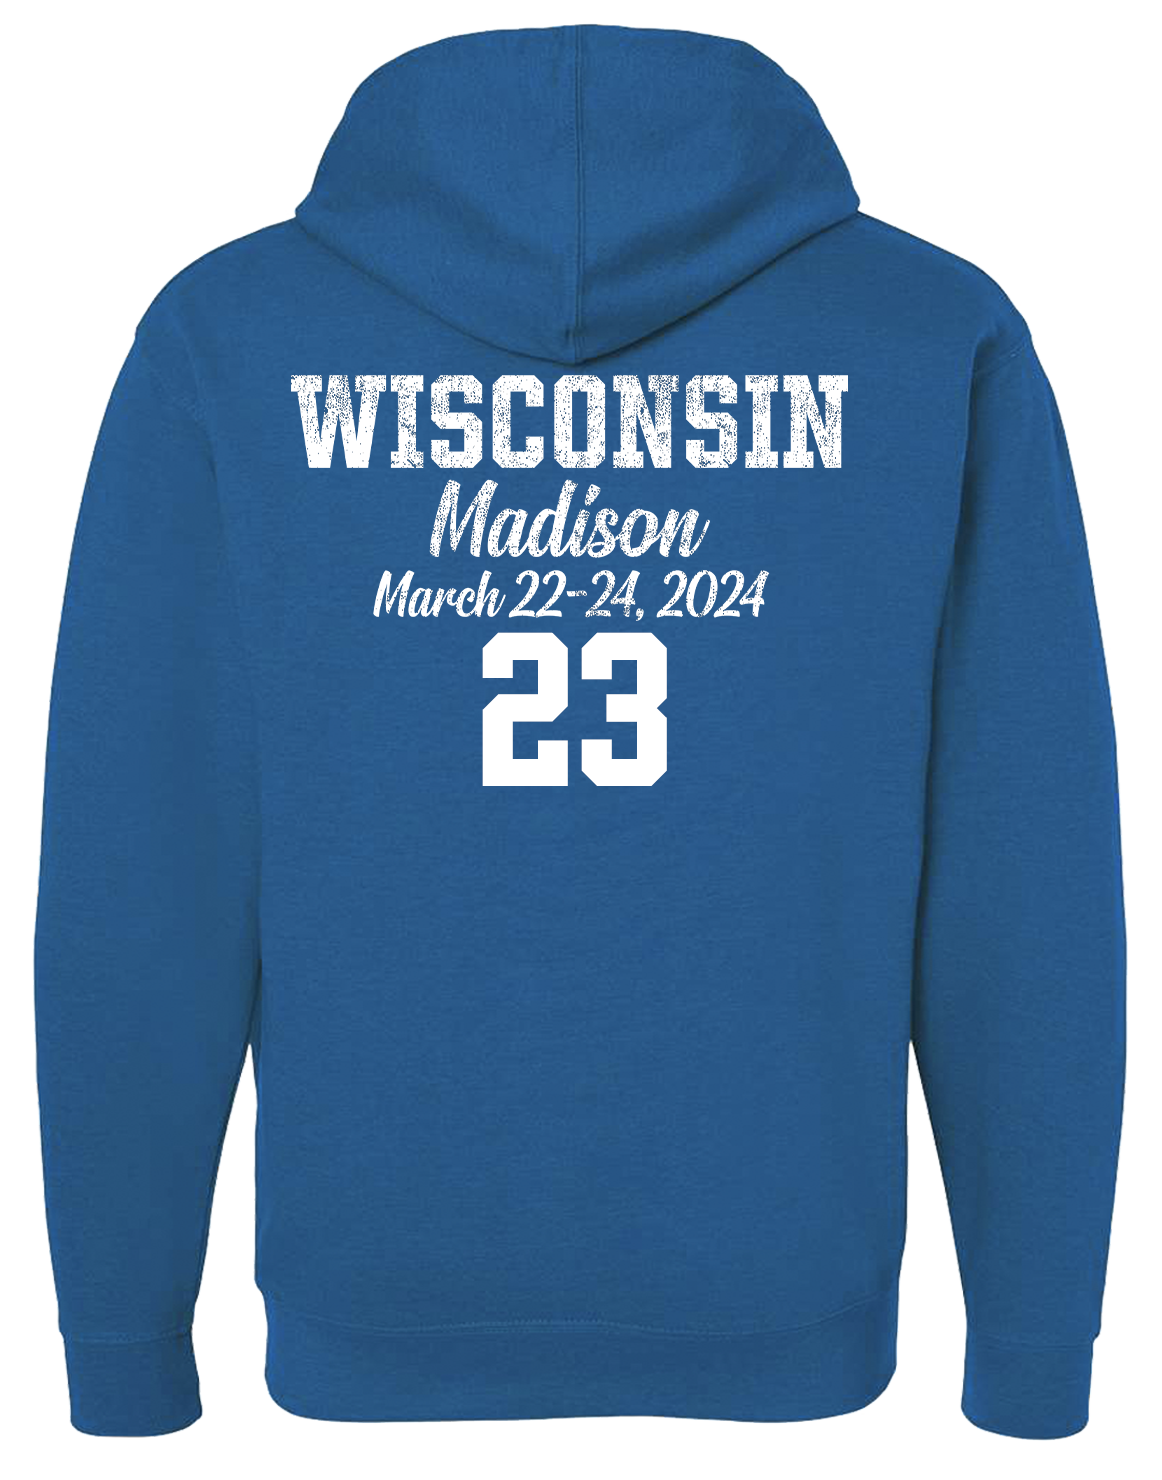 Heather Blue Wisconsin State Basketball Sweatshirt